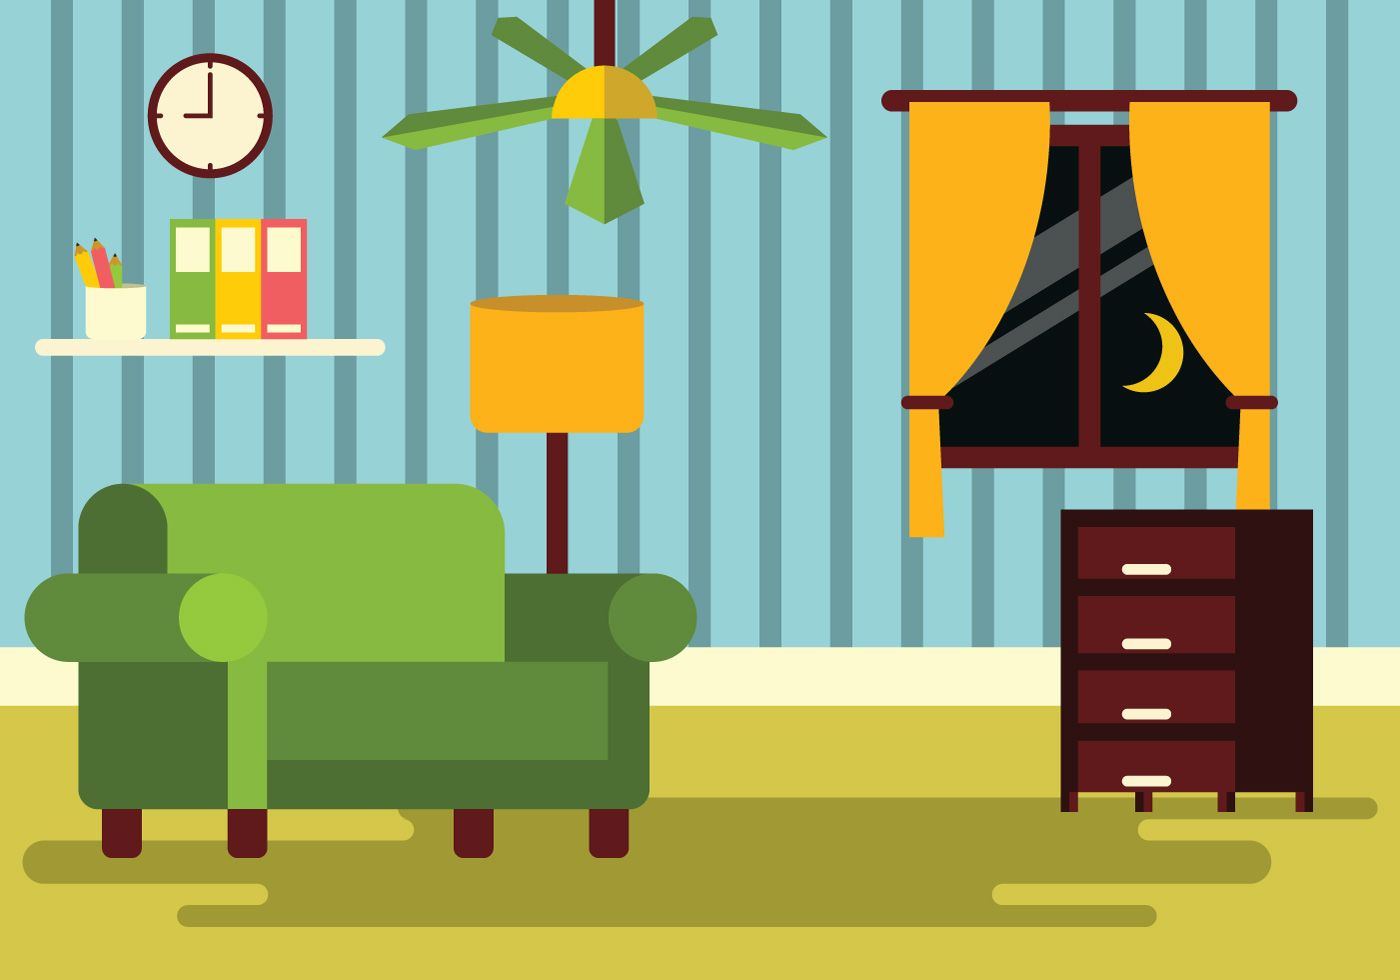 free living room vector illustration